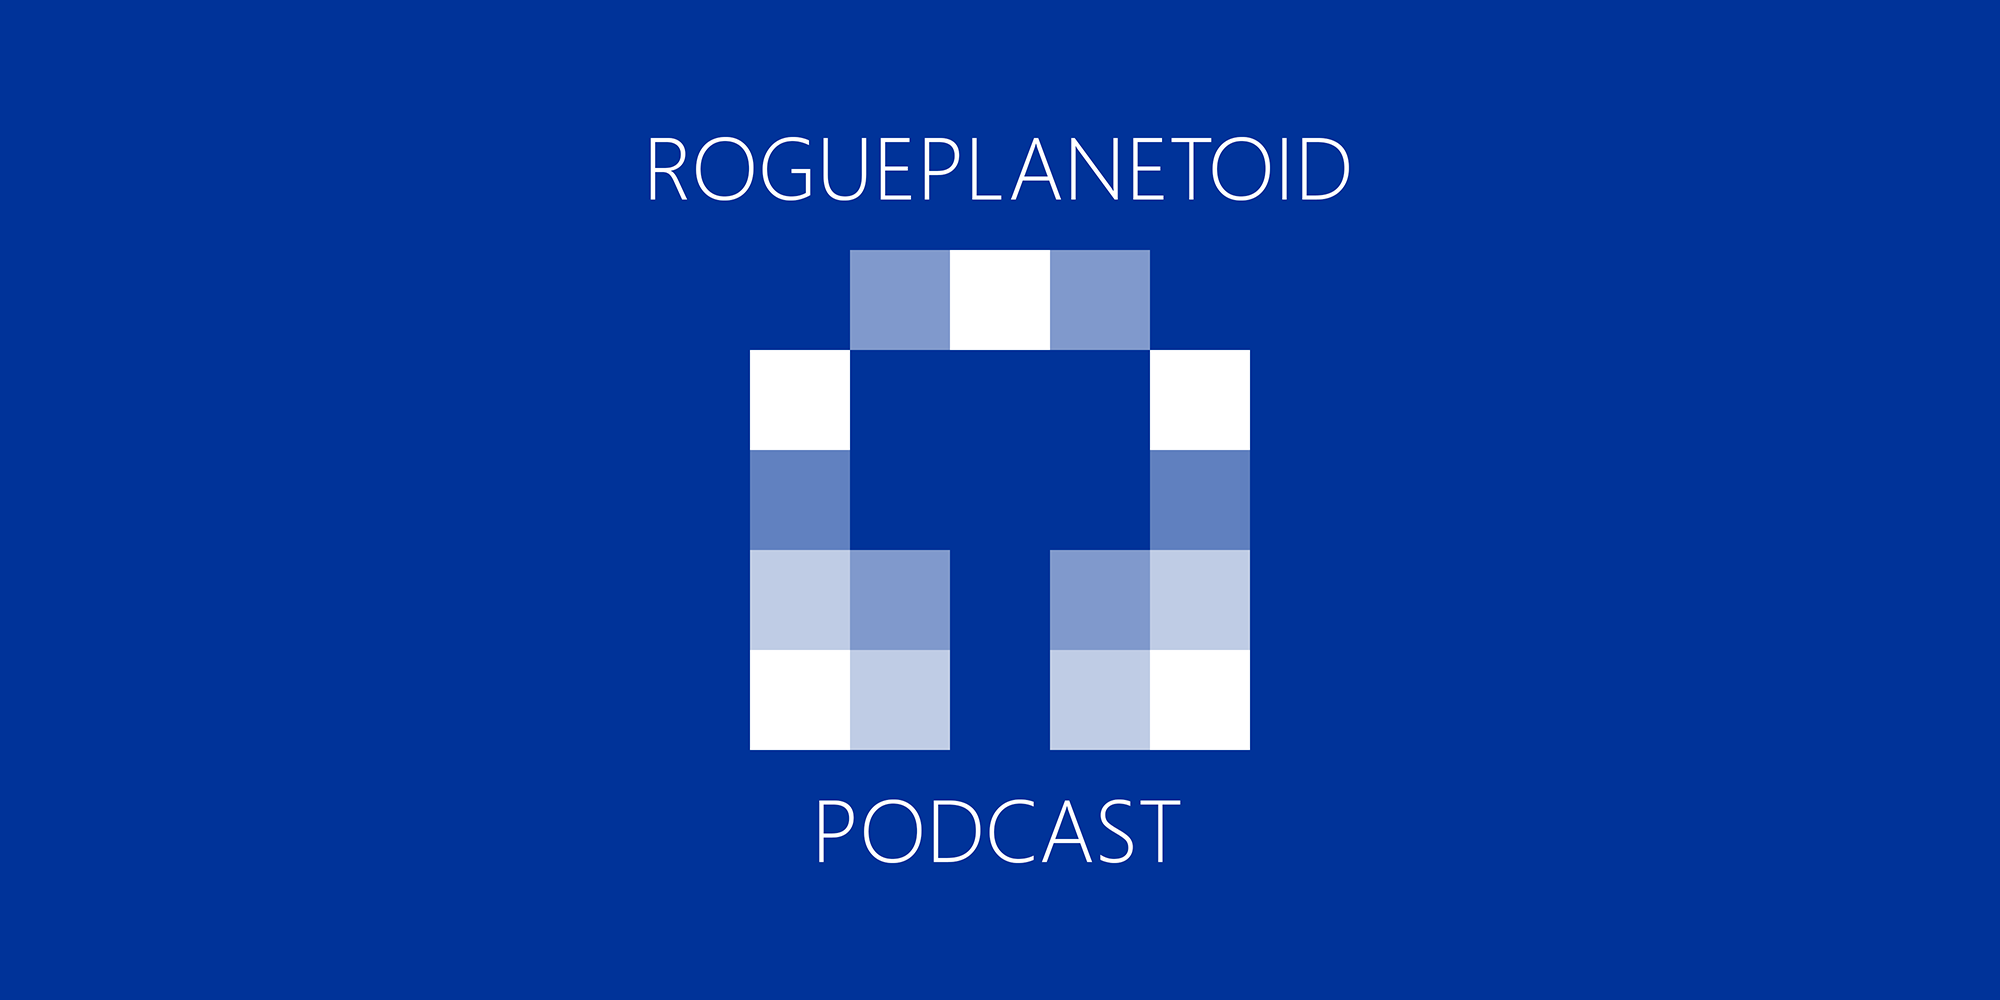 RoguePlanetoid Podcast - Episode Two - Windows App SDK